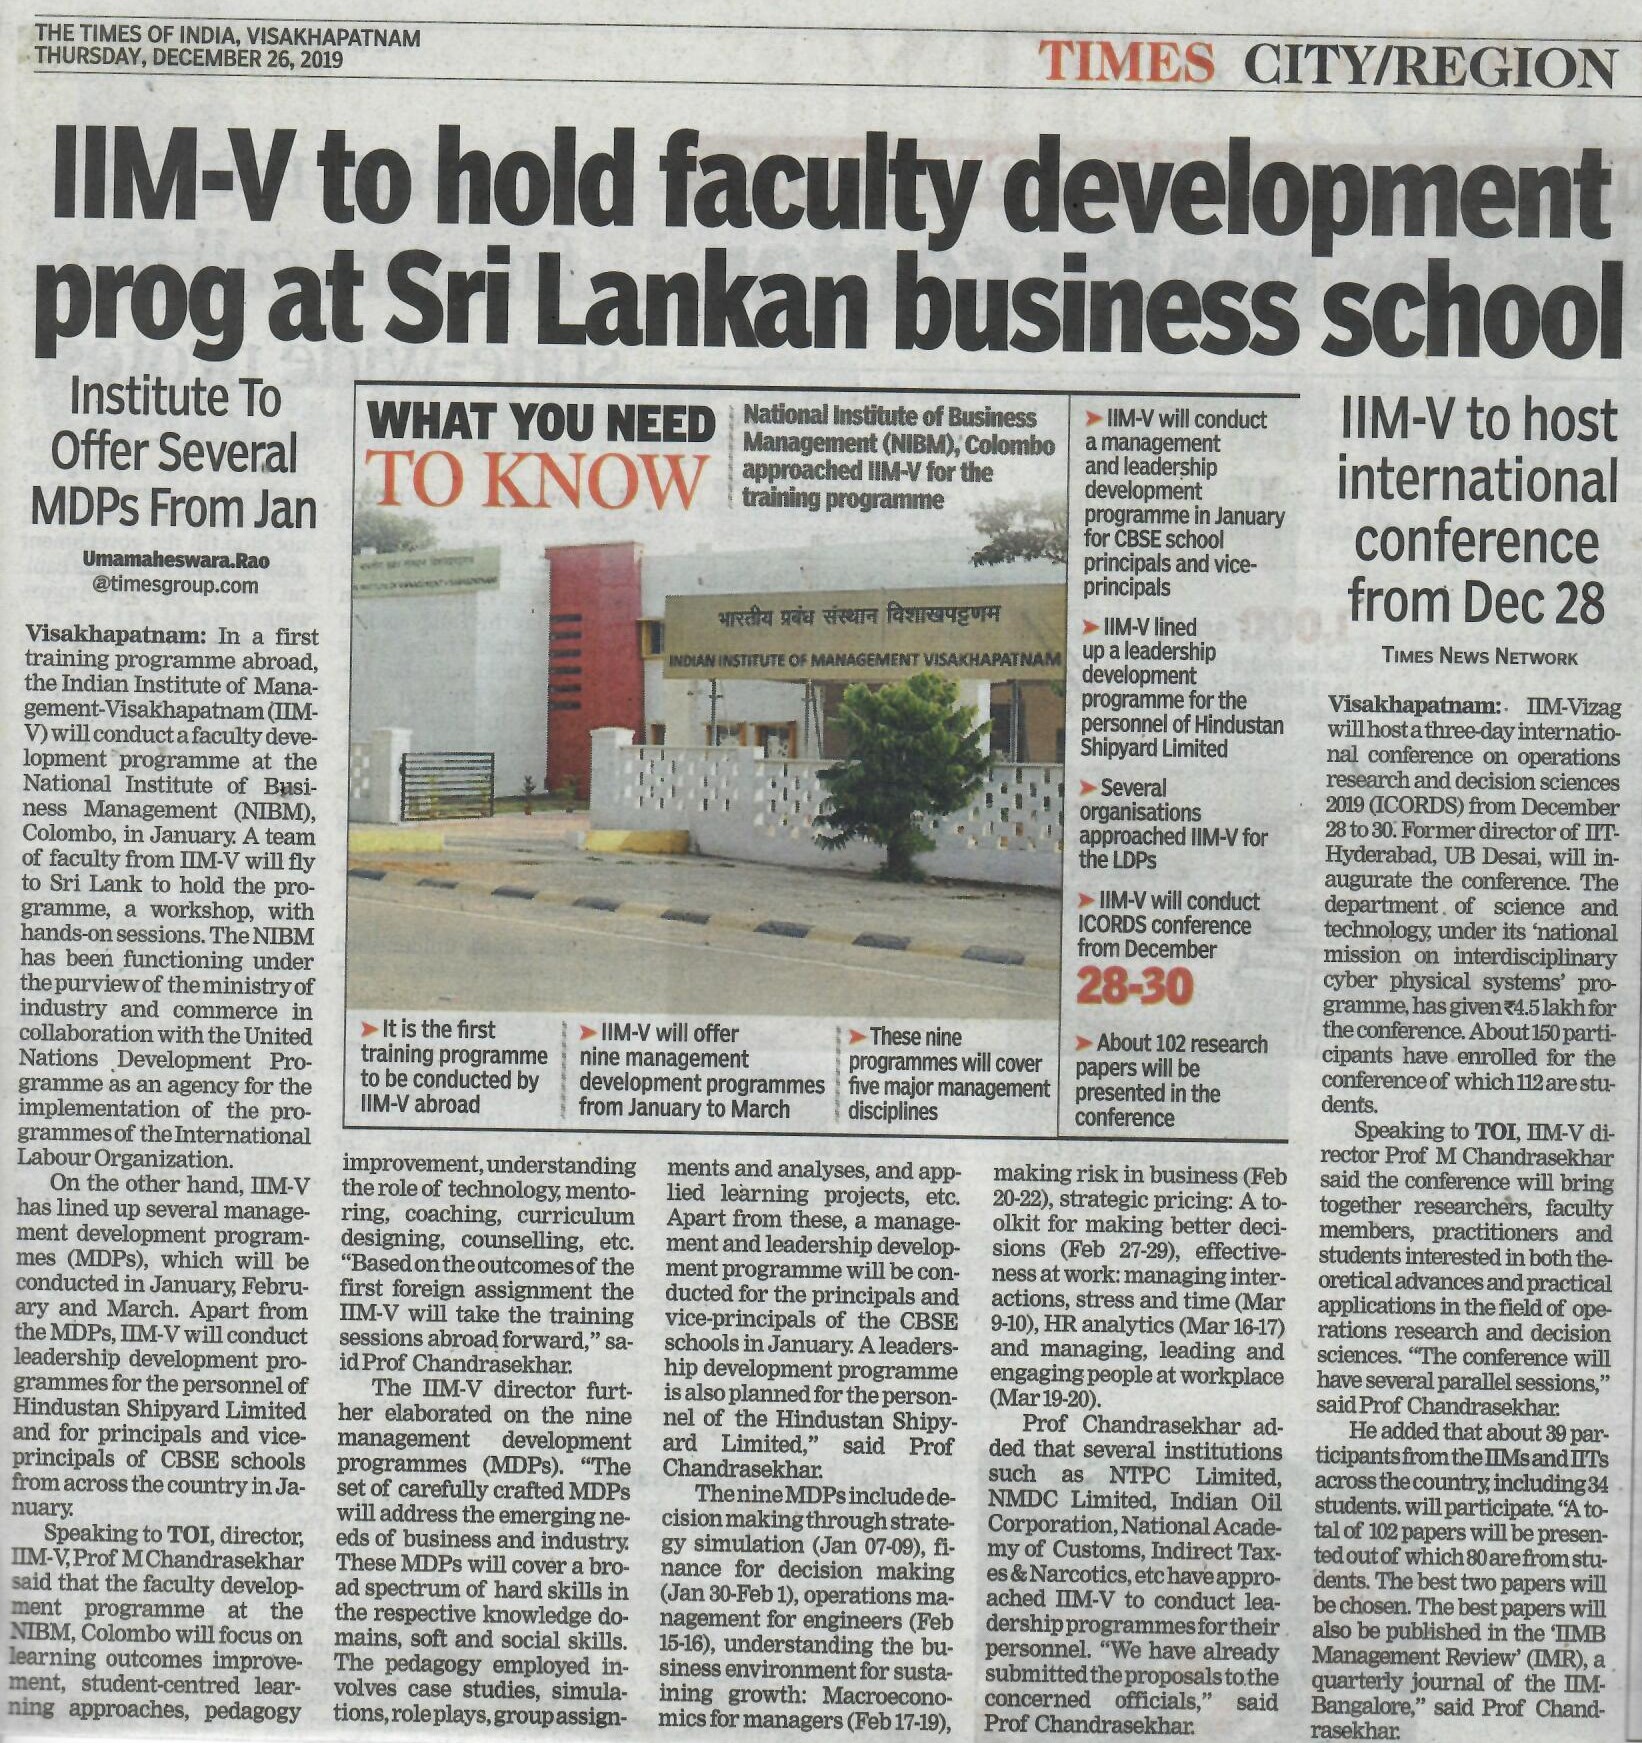 IIM-V to hold FDP Program at Sri Lankan Business School  - 26.12.2019